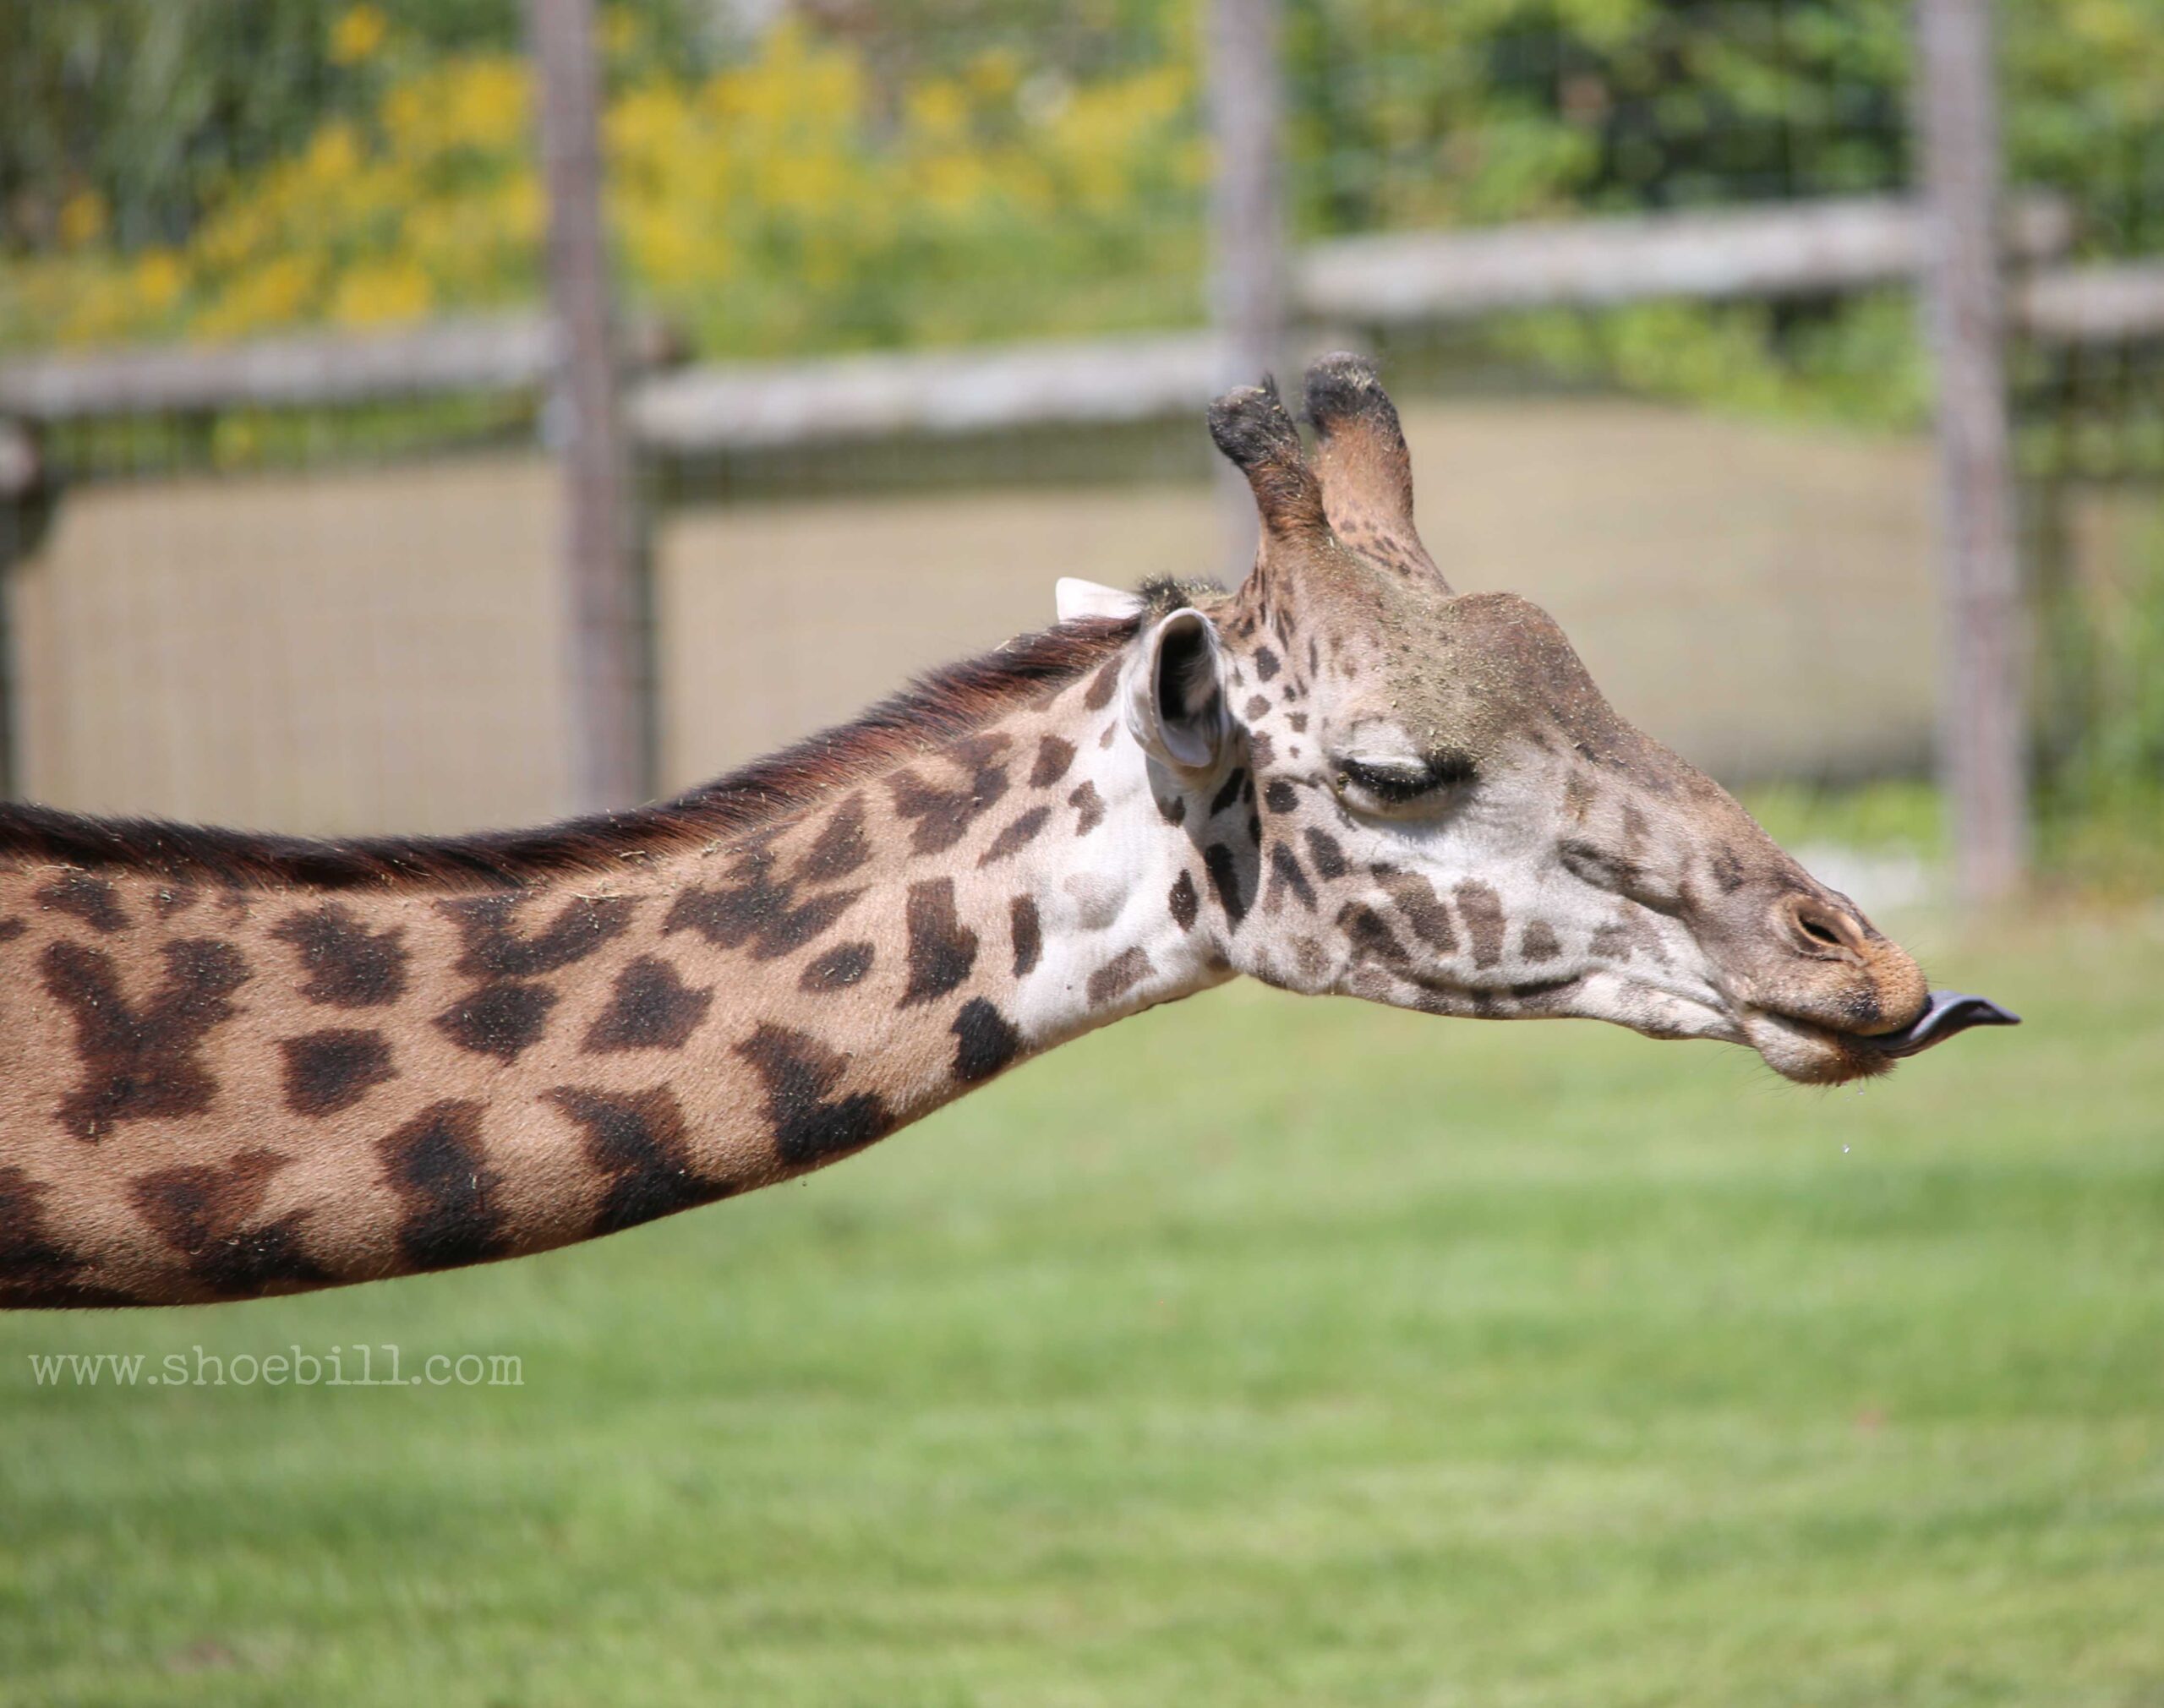 How long is a giraffe tongue?